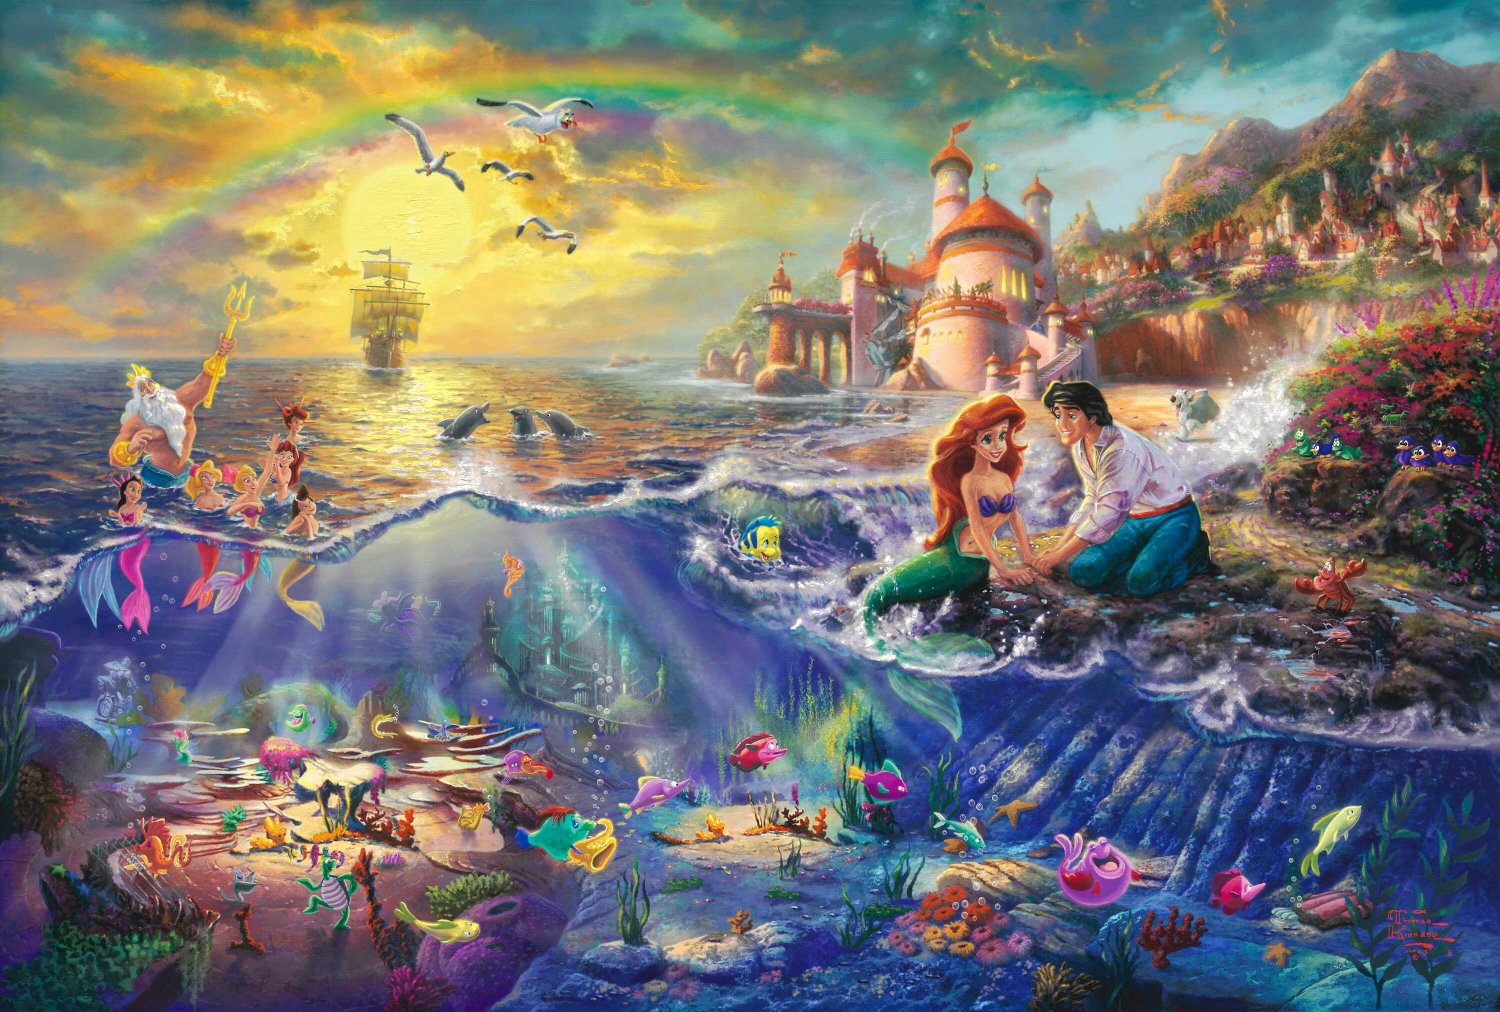 Ariel the little mermaid inspirated to Kink@de Cross Stitch Pattern Pdf 496 * 335 stitches E194